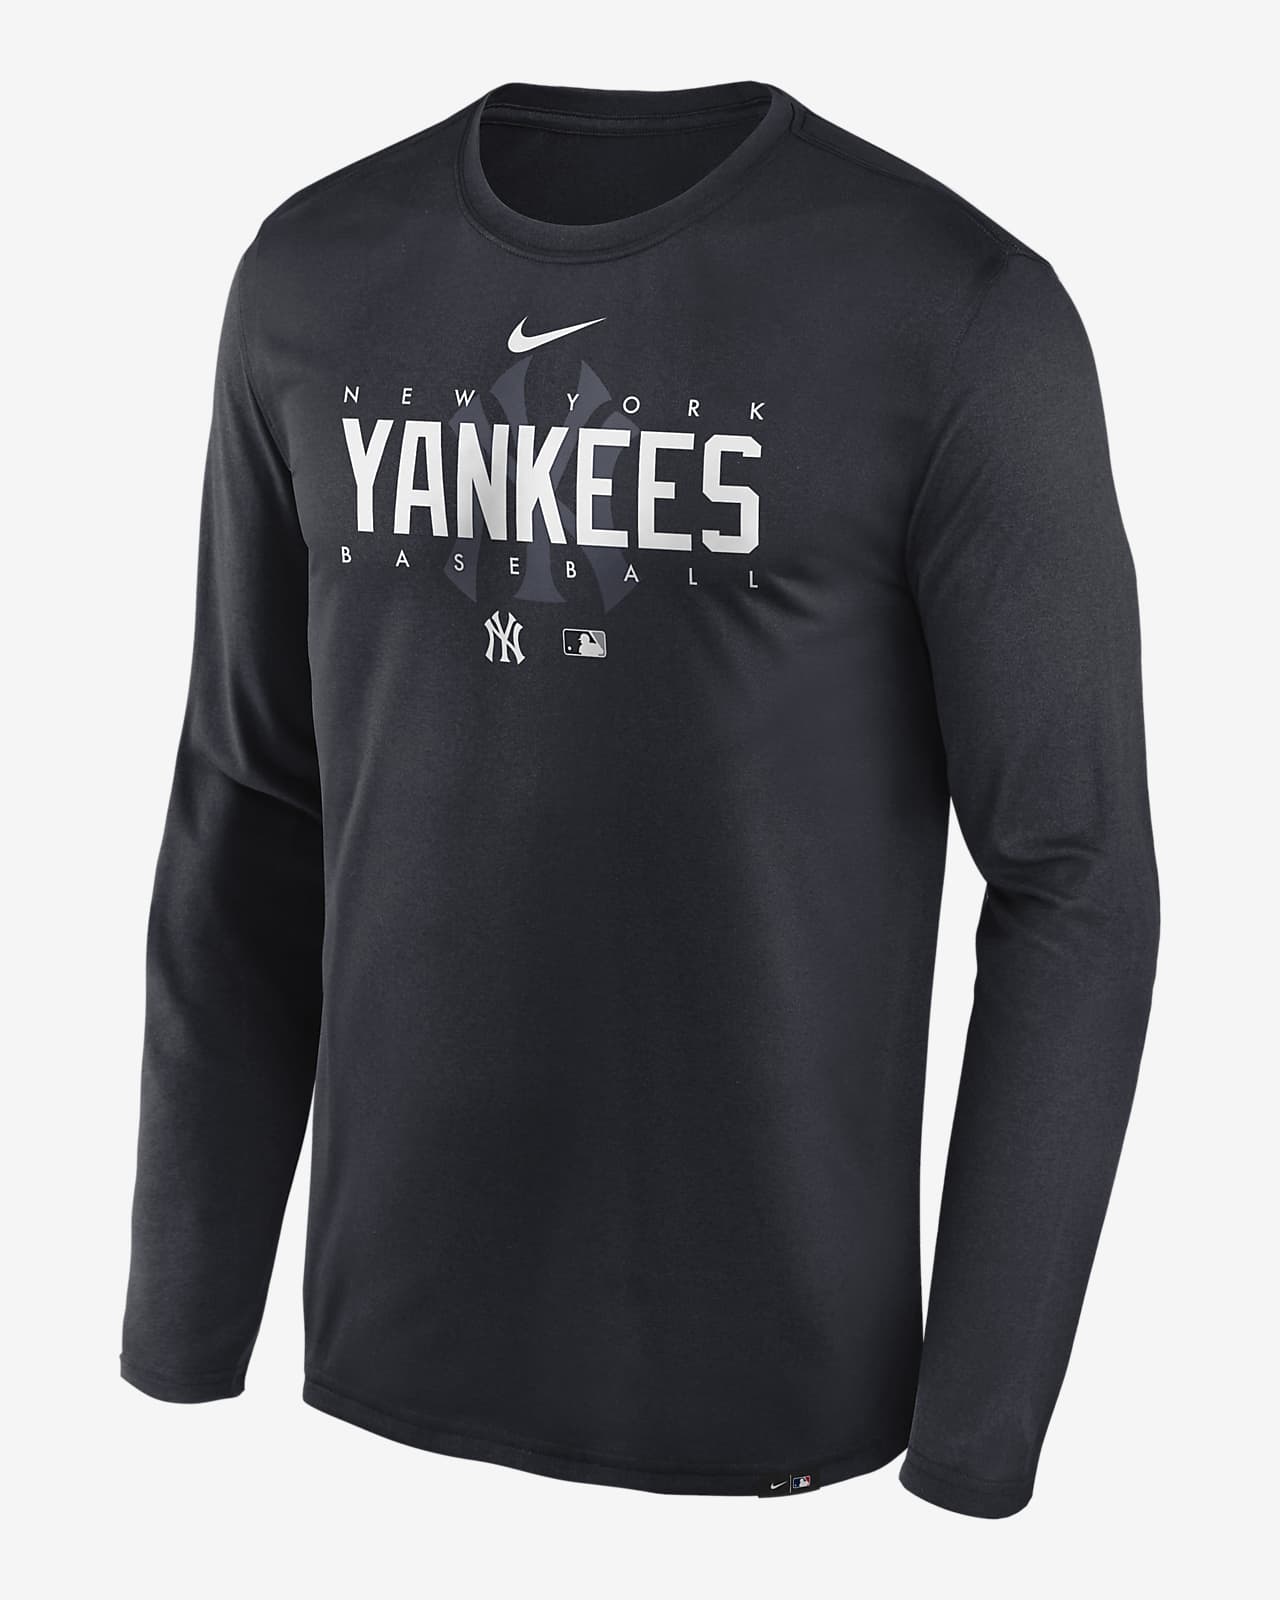 New York Yankees Nike Dri Fit Long Sleeve T-shirt Grey Size Medium